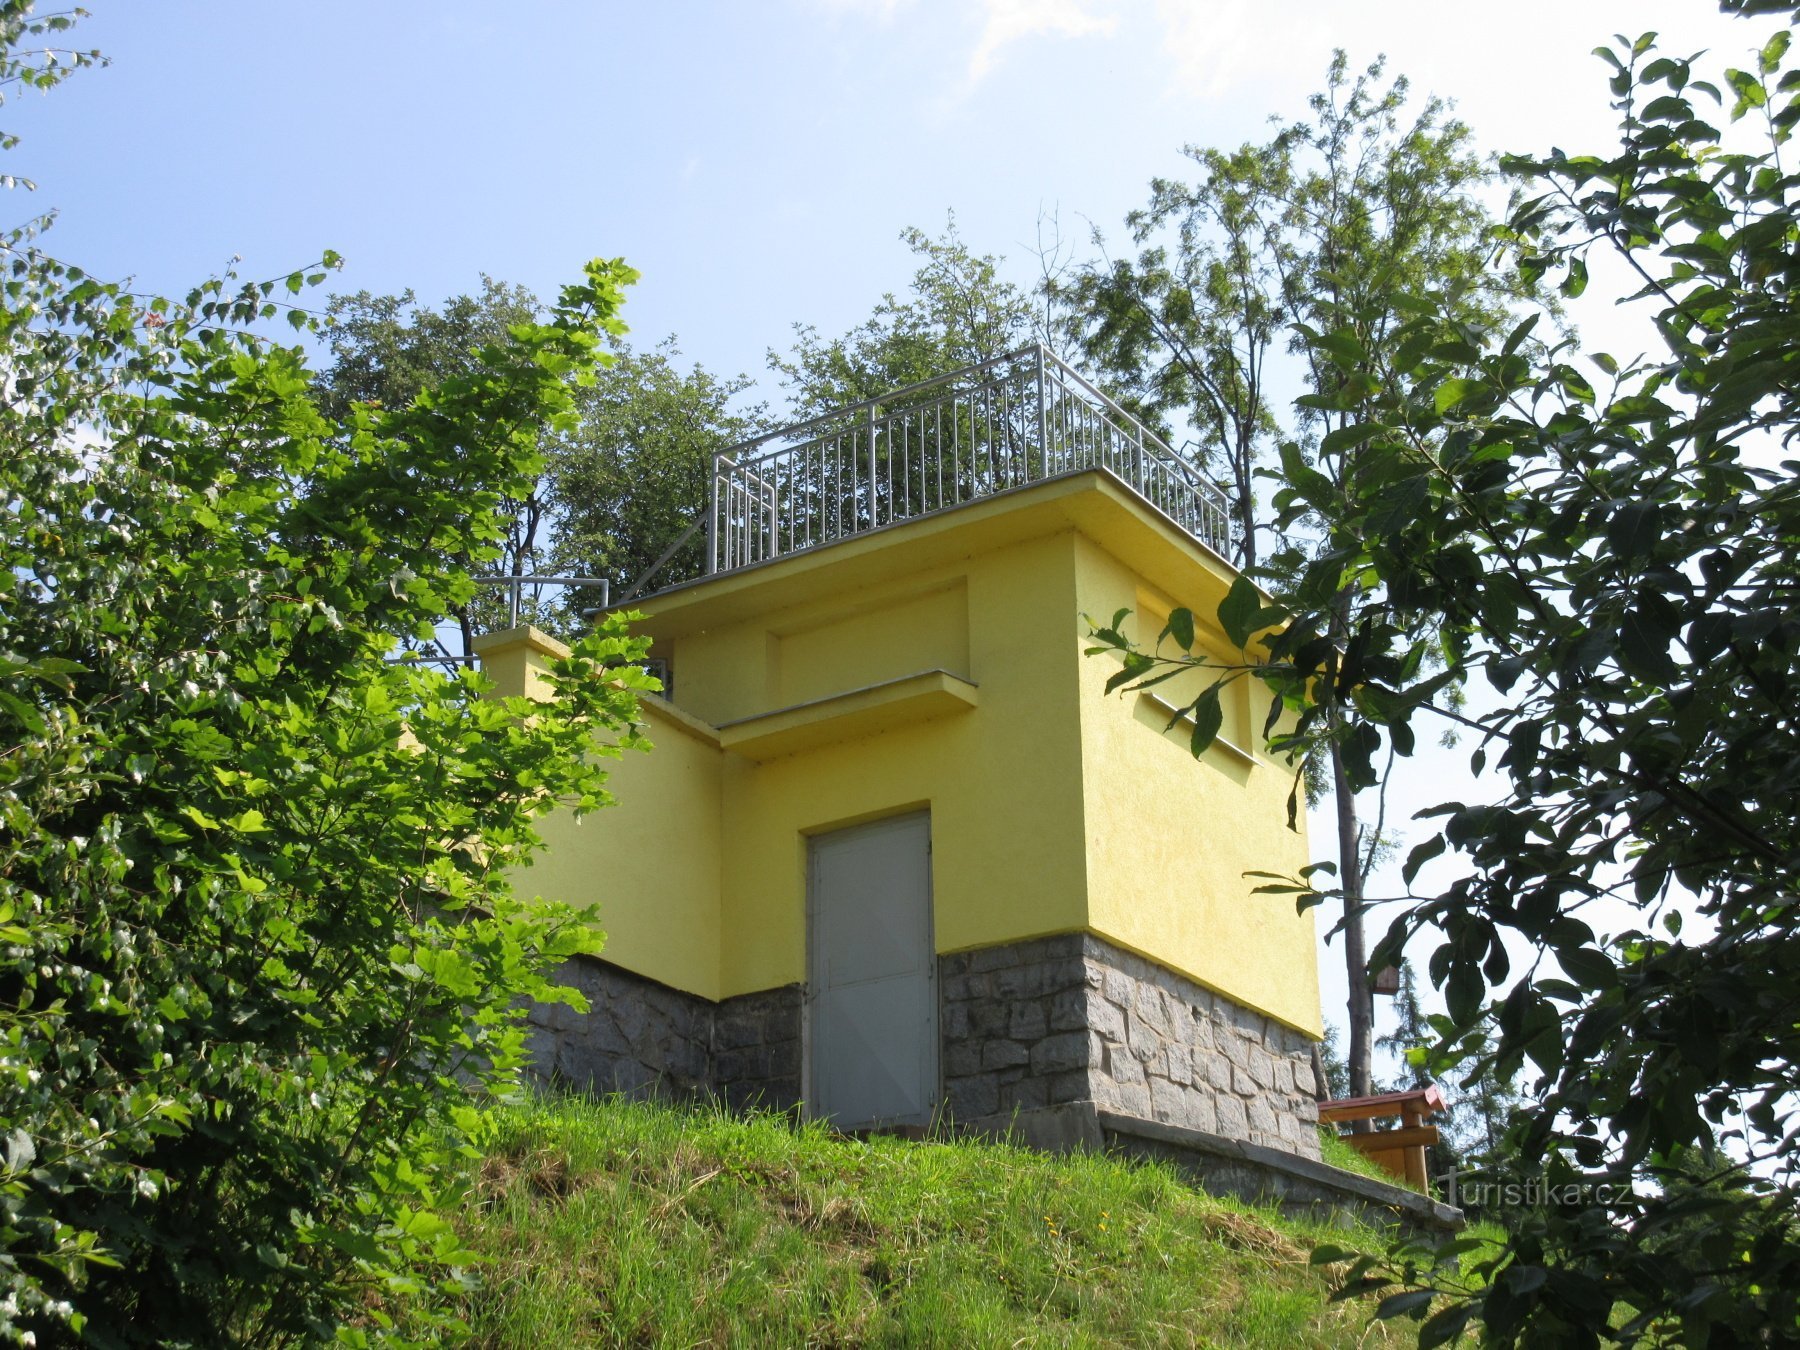 Ždírec nad Doubravau - torre di avvistamento e microbirrificio Džekov Ranch